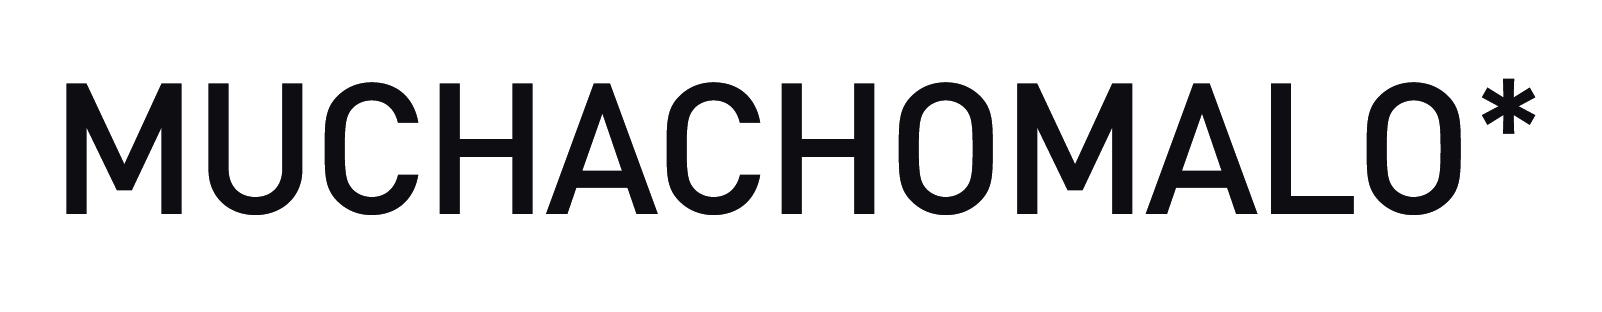 Muchachomalo logo